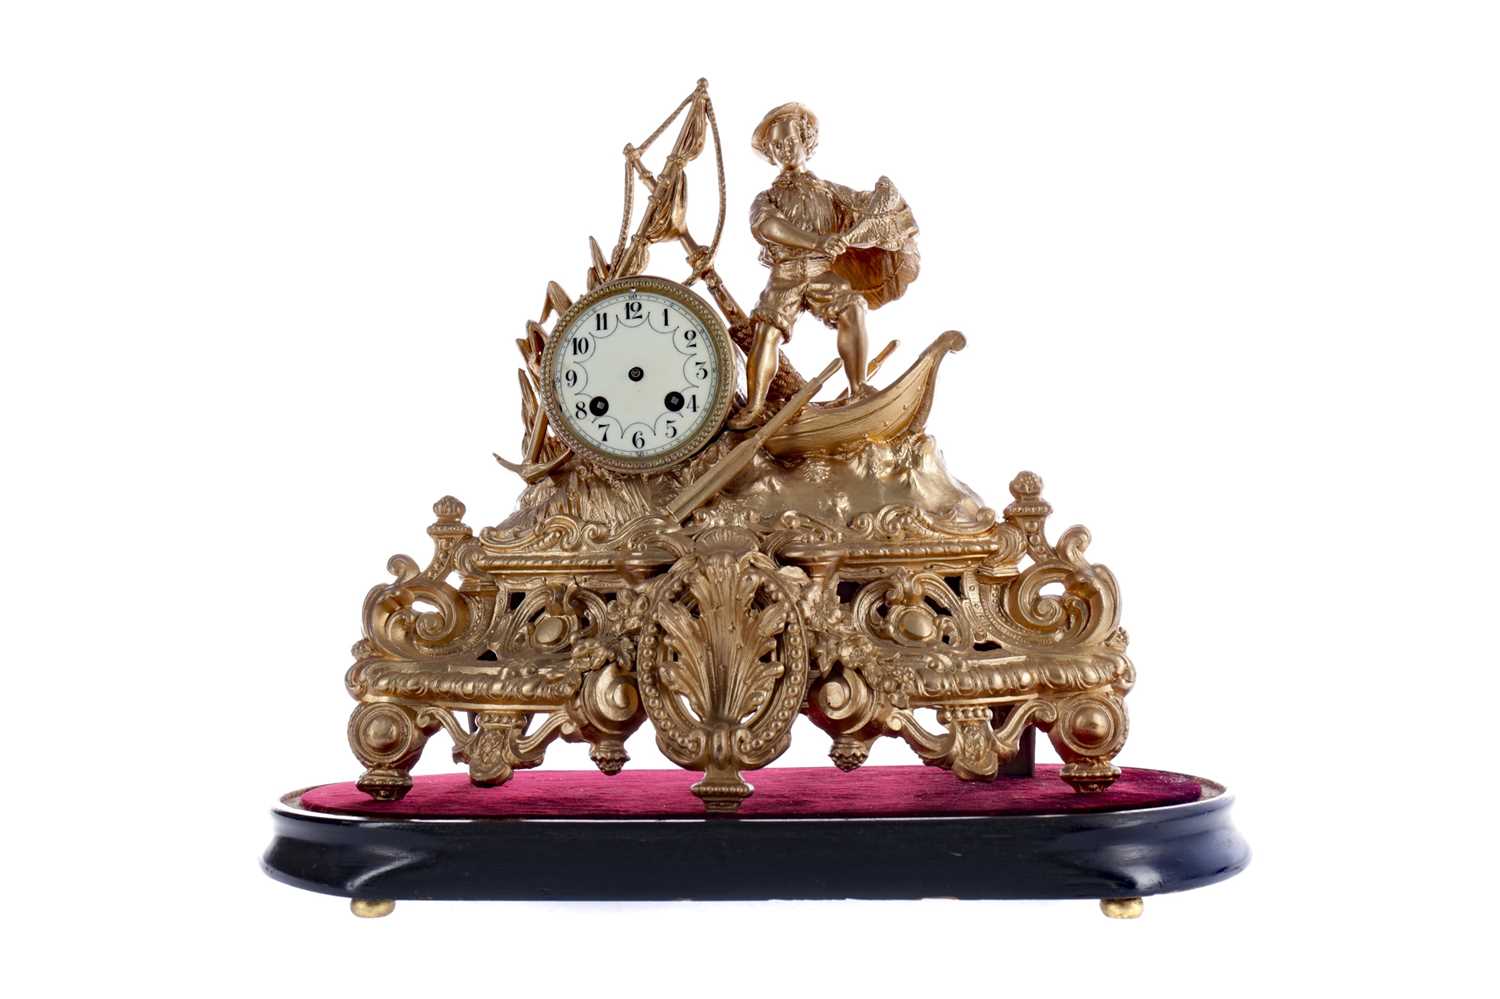 Lot 1882 - A LATE 19TH CENTURY FIGURAL MANTEL CLOCK